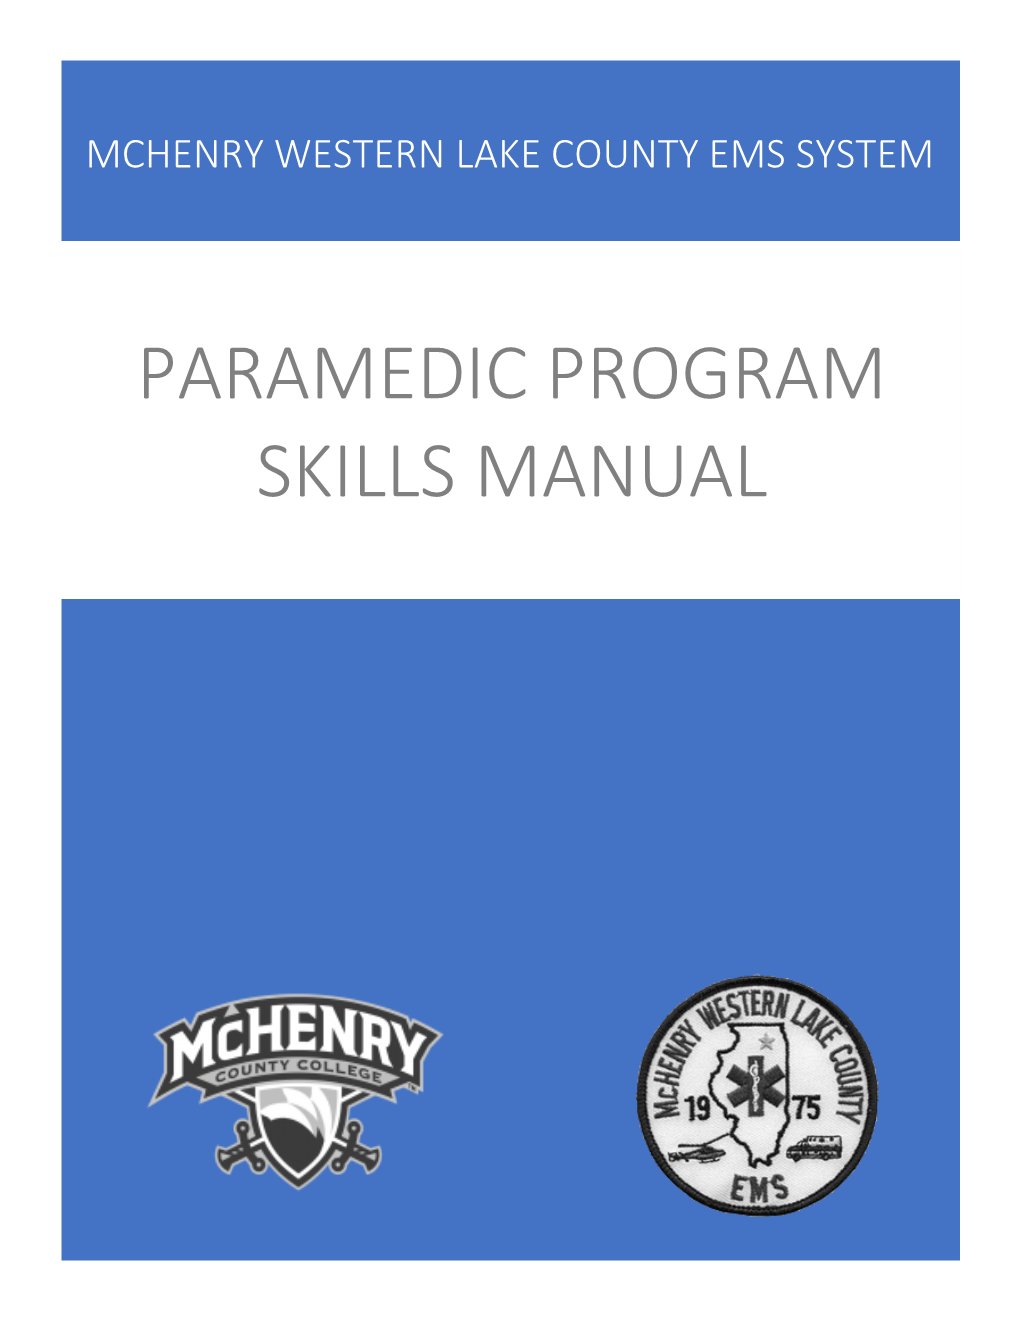 Paramedic Program Skills Manual